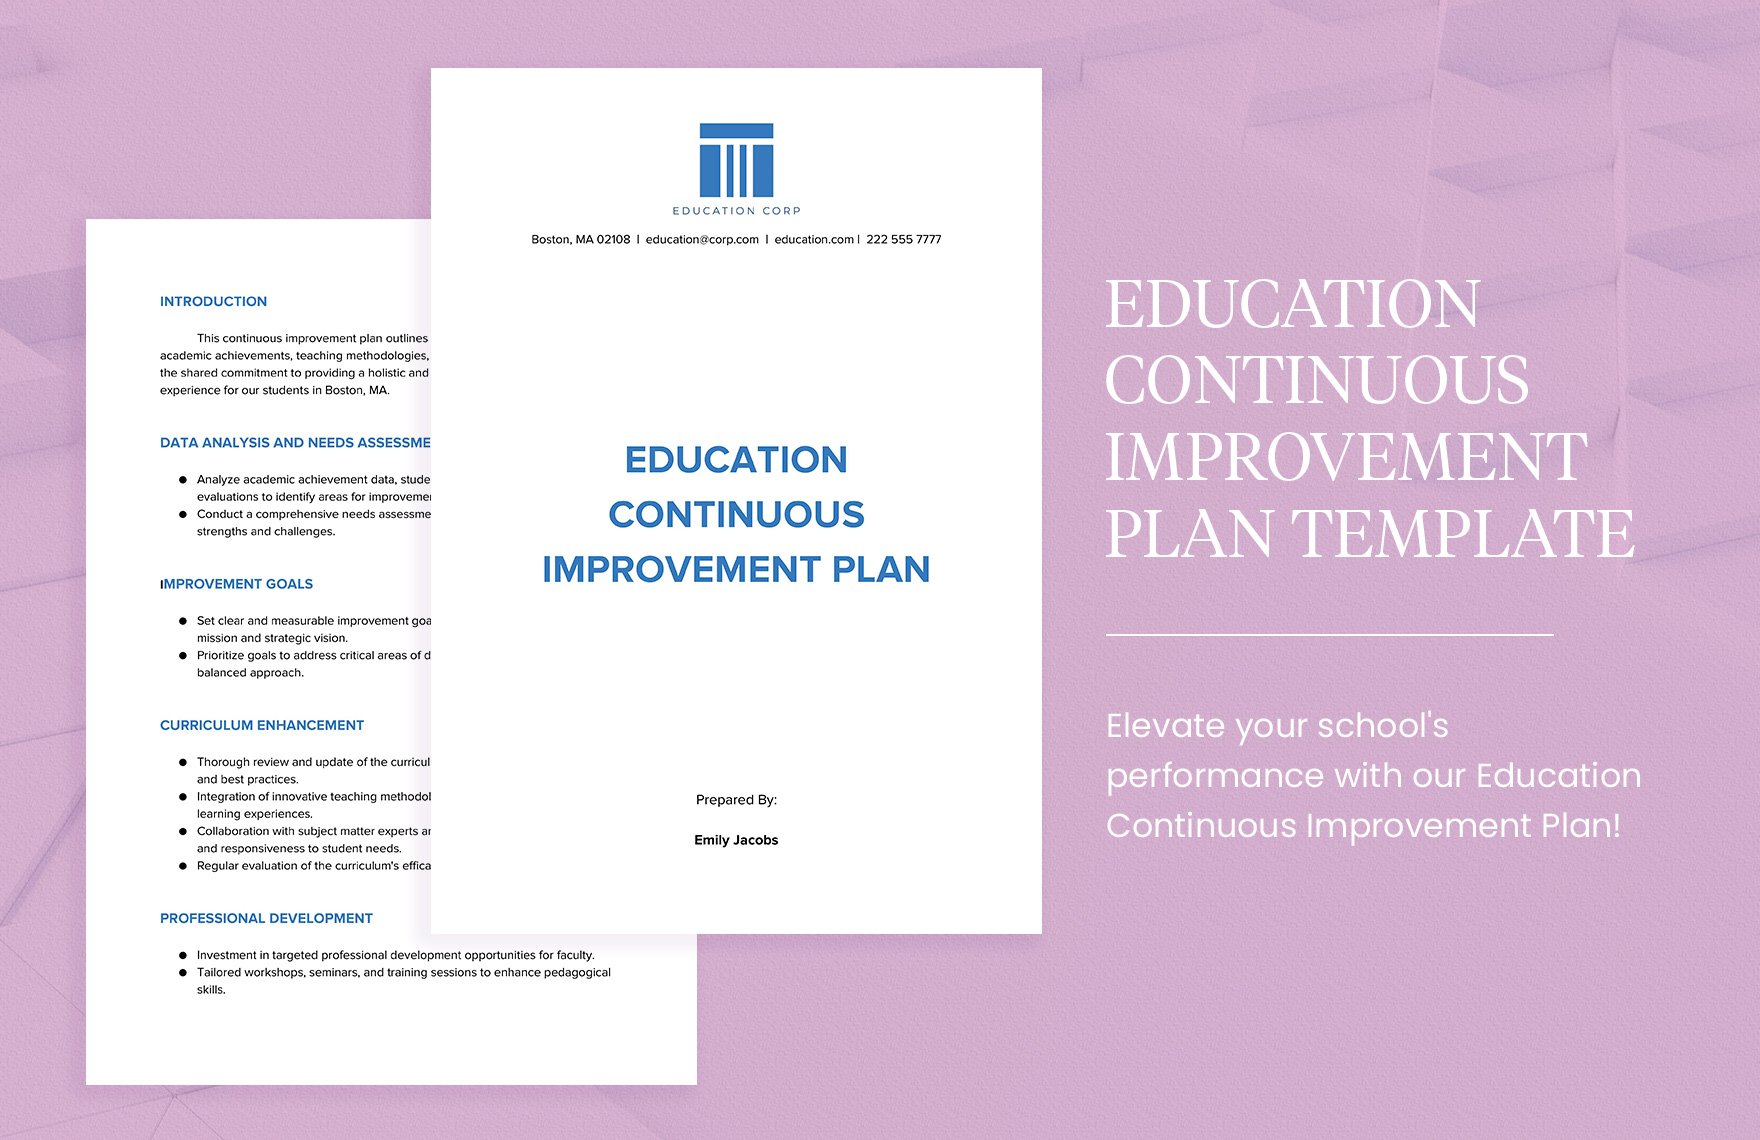 Education Continuous Improvement Plan Template